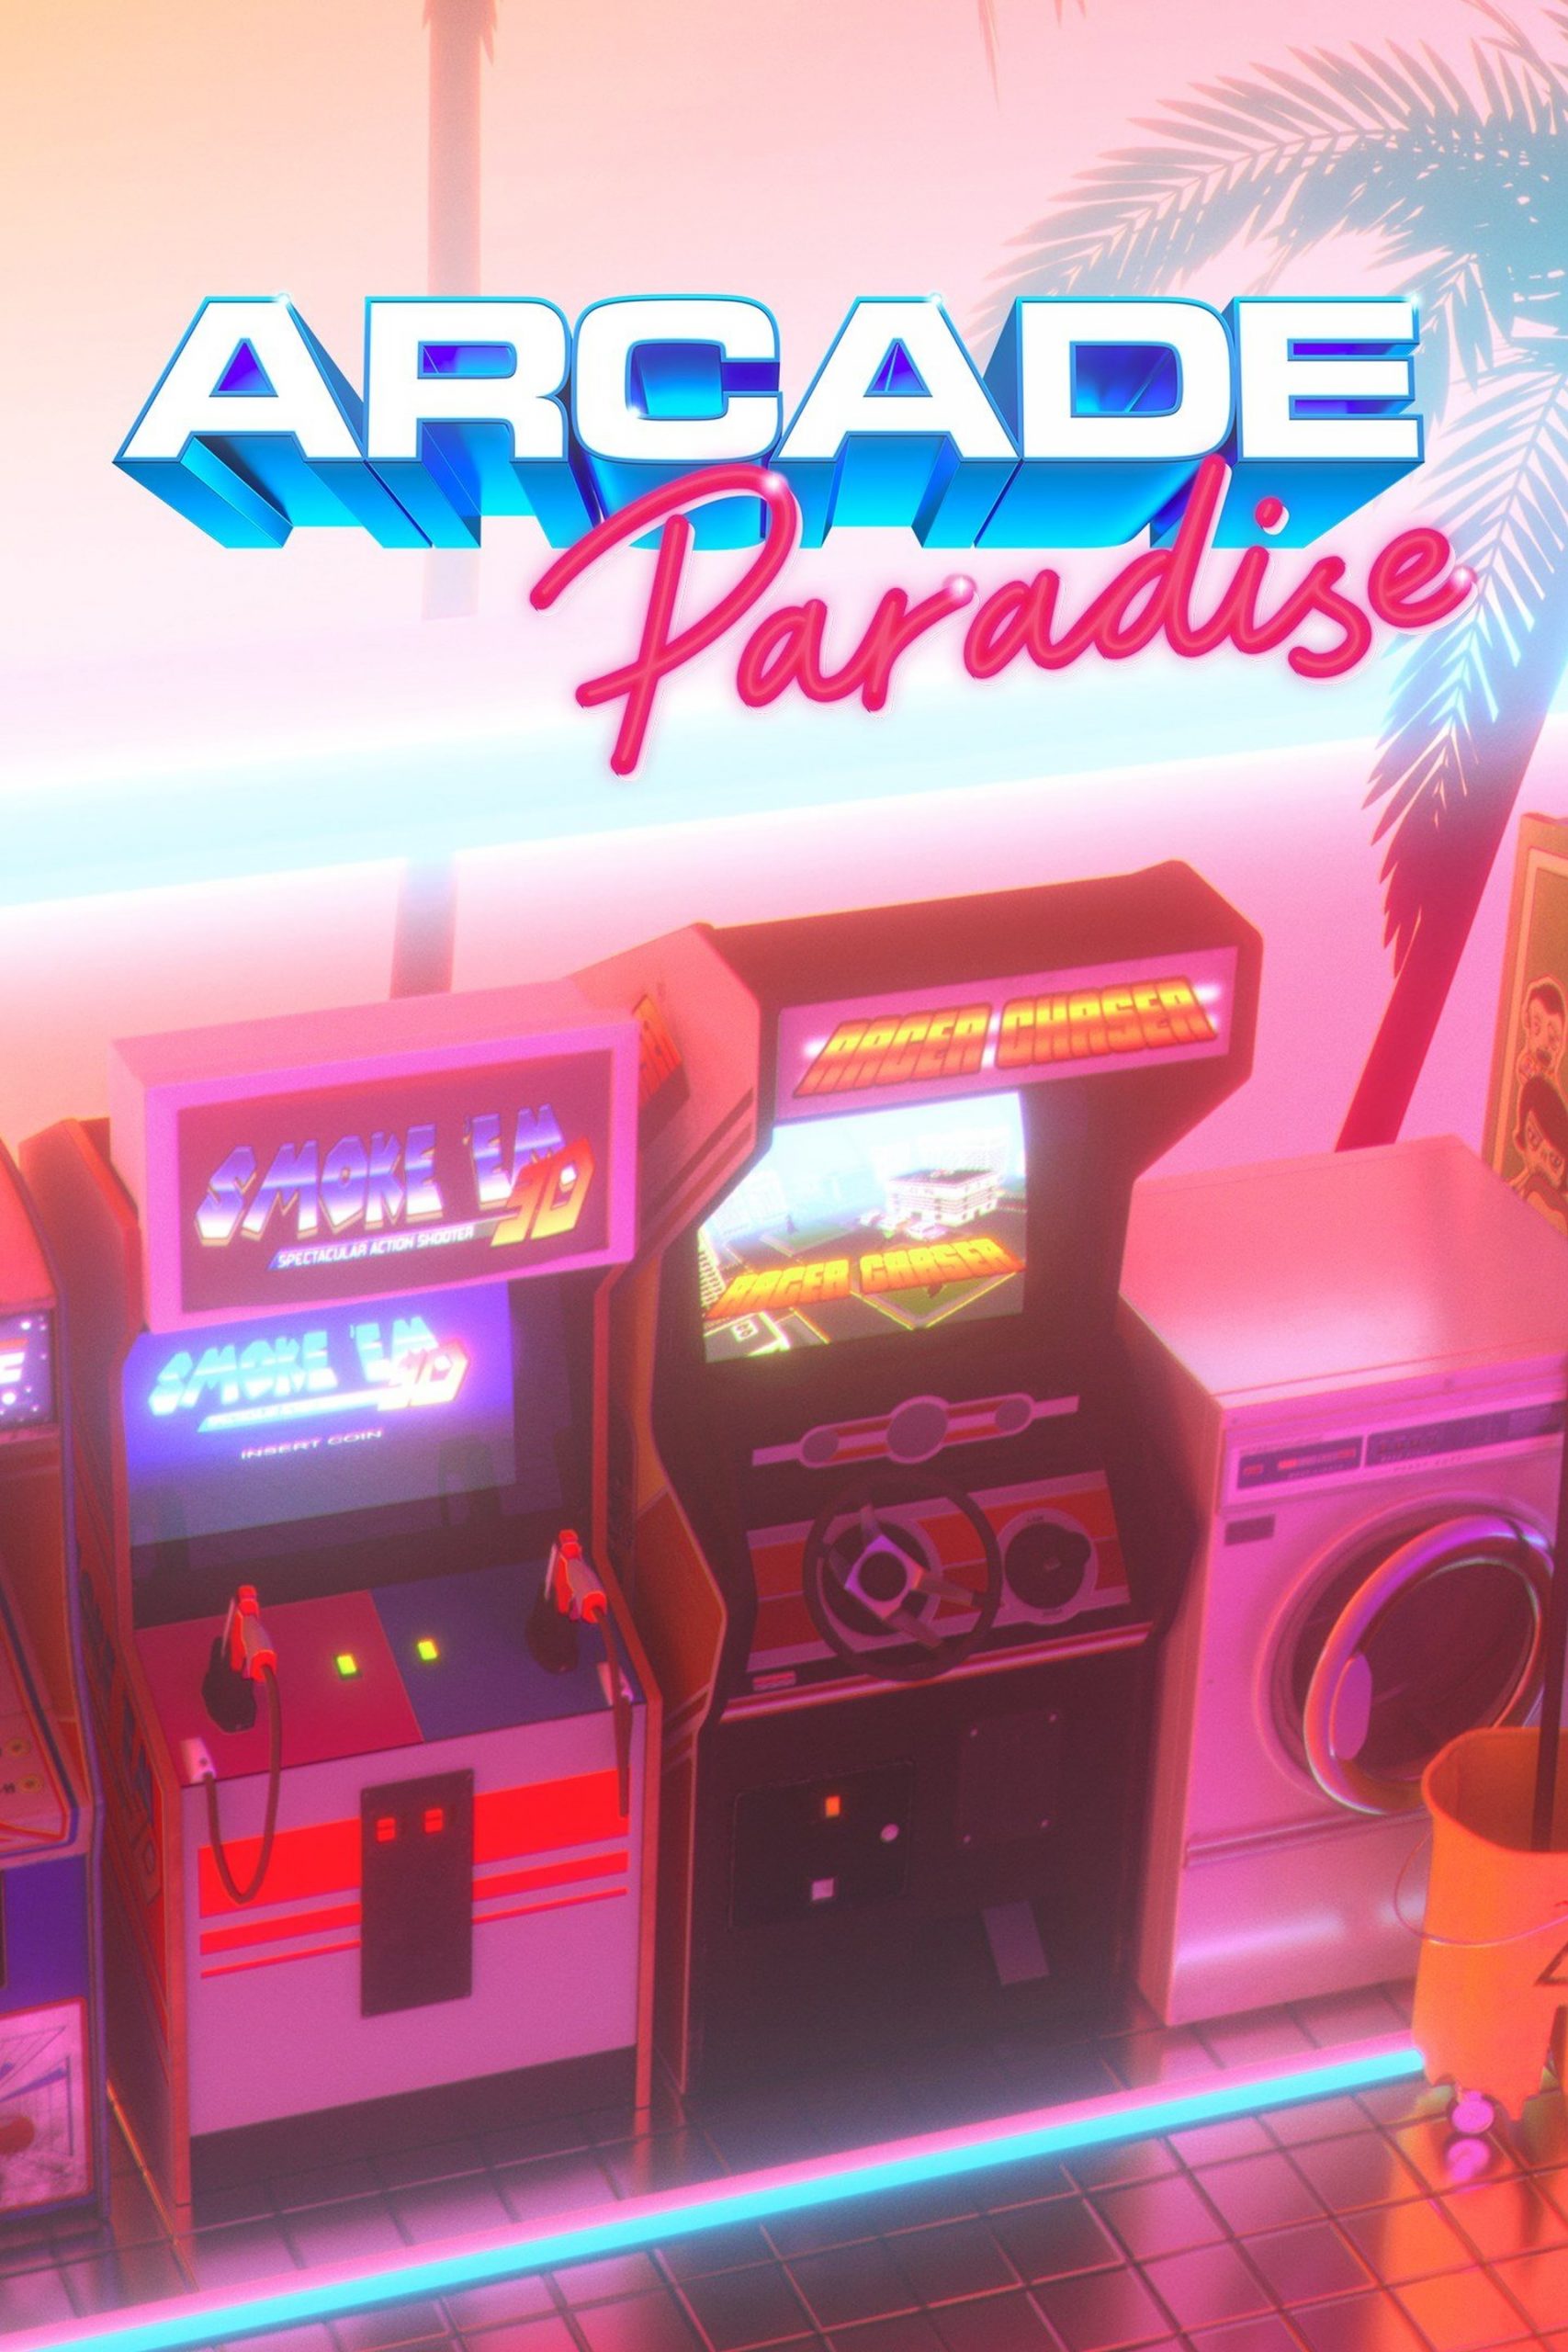 Arcade Paradeise - la 11 Phato